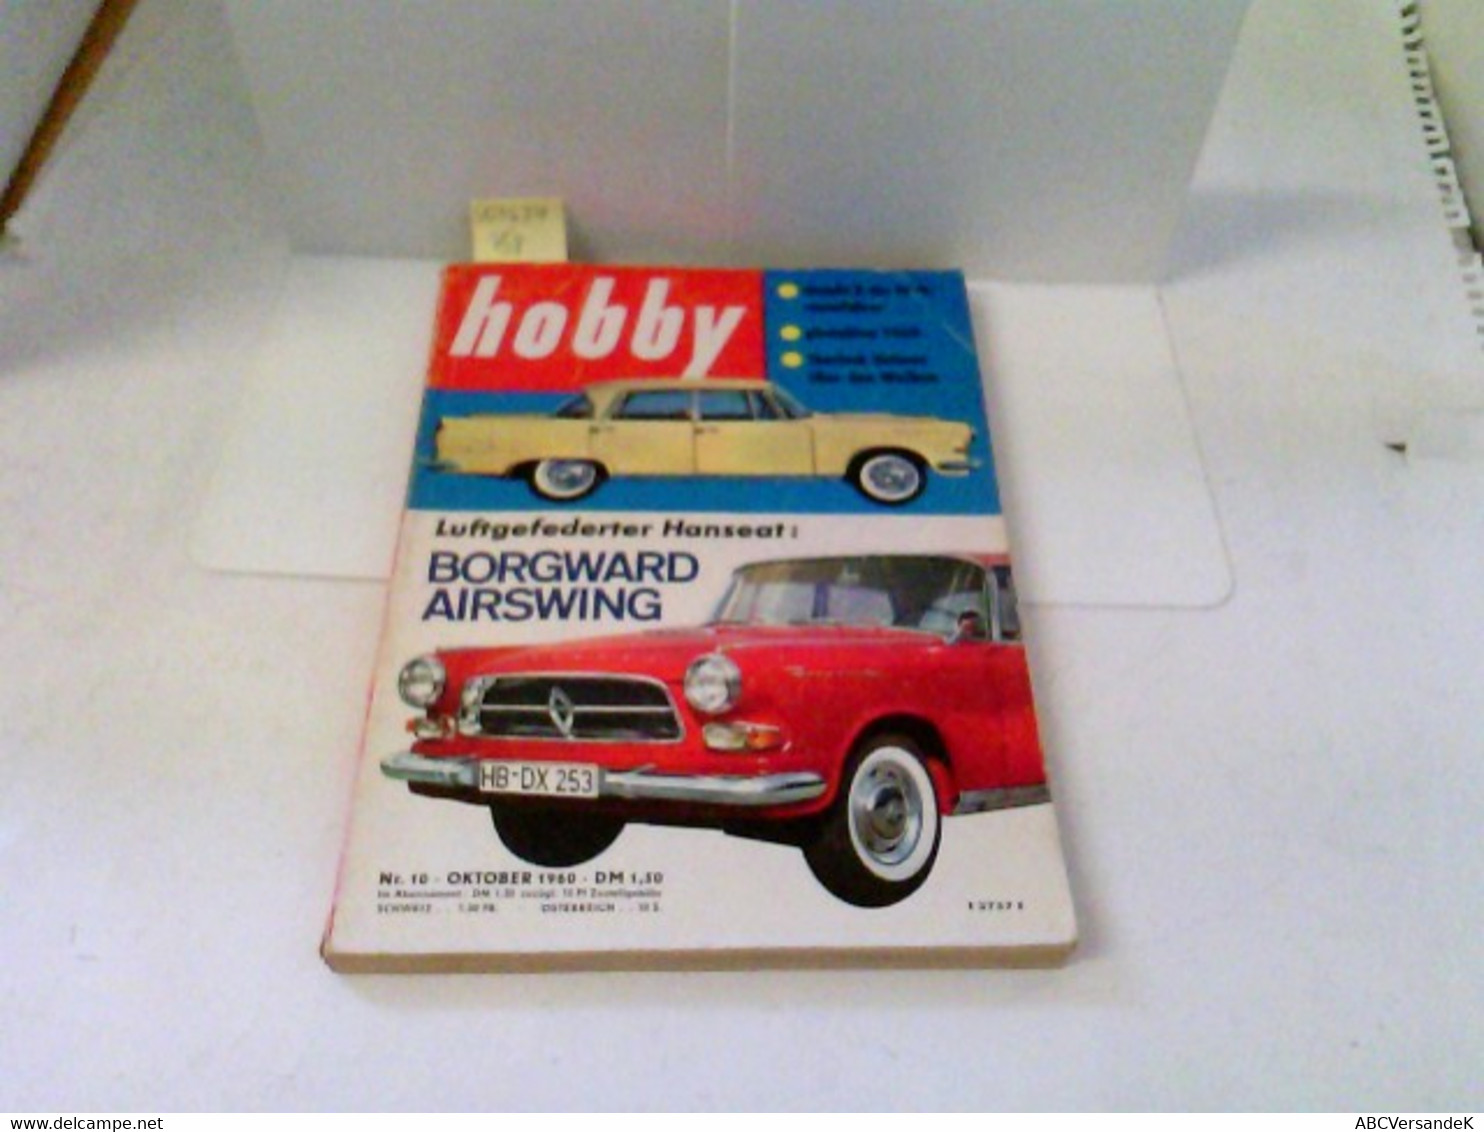 Hobby - Das Magazin Der Technik - Heft 1960/10 - Luftgefederter Hanseat: Borgward Airswing U.v.m. - Techniek